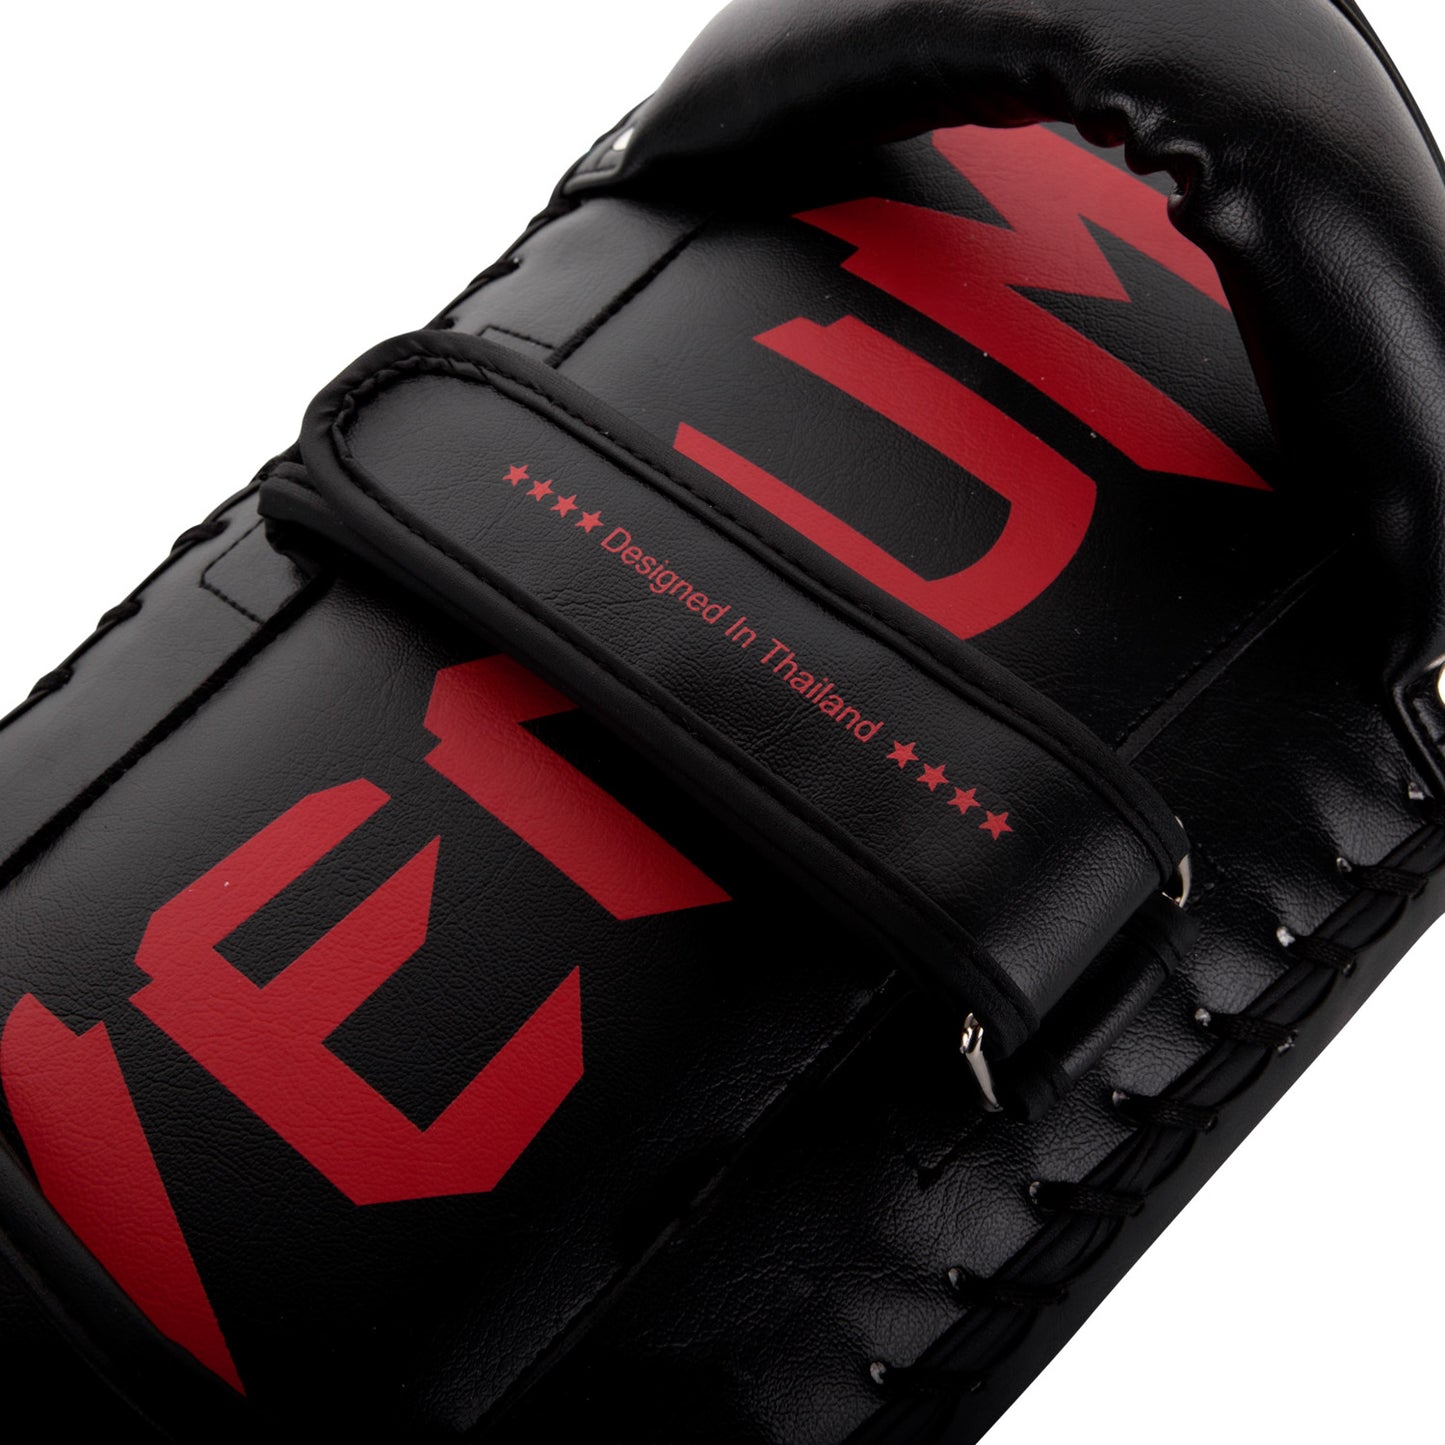 Venum Giant Kick Pads - Black/Red (Pair)